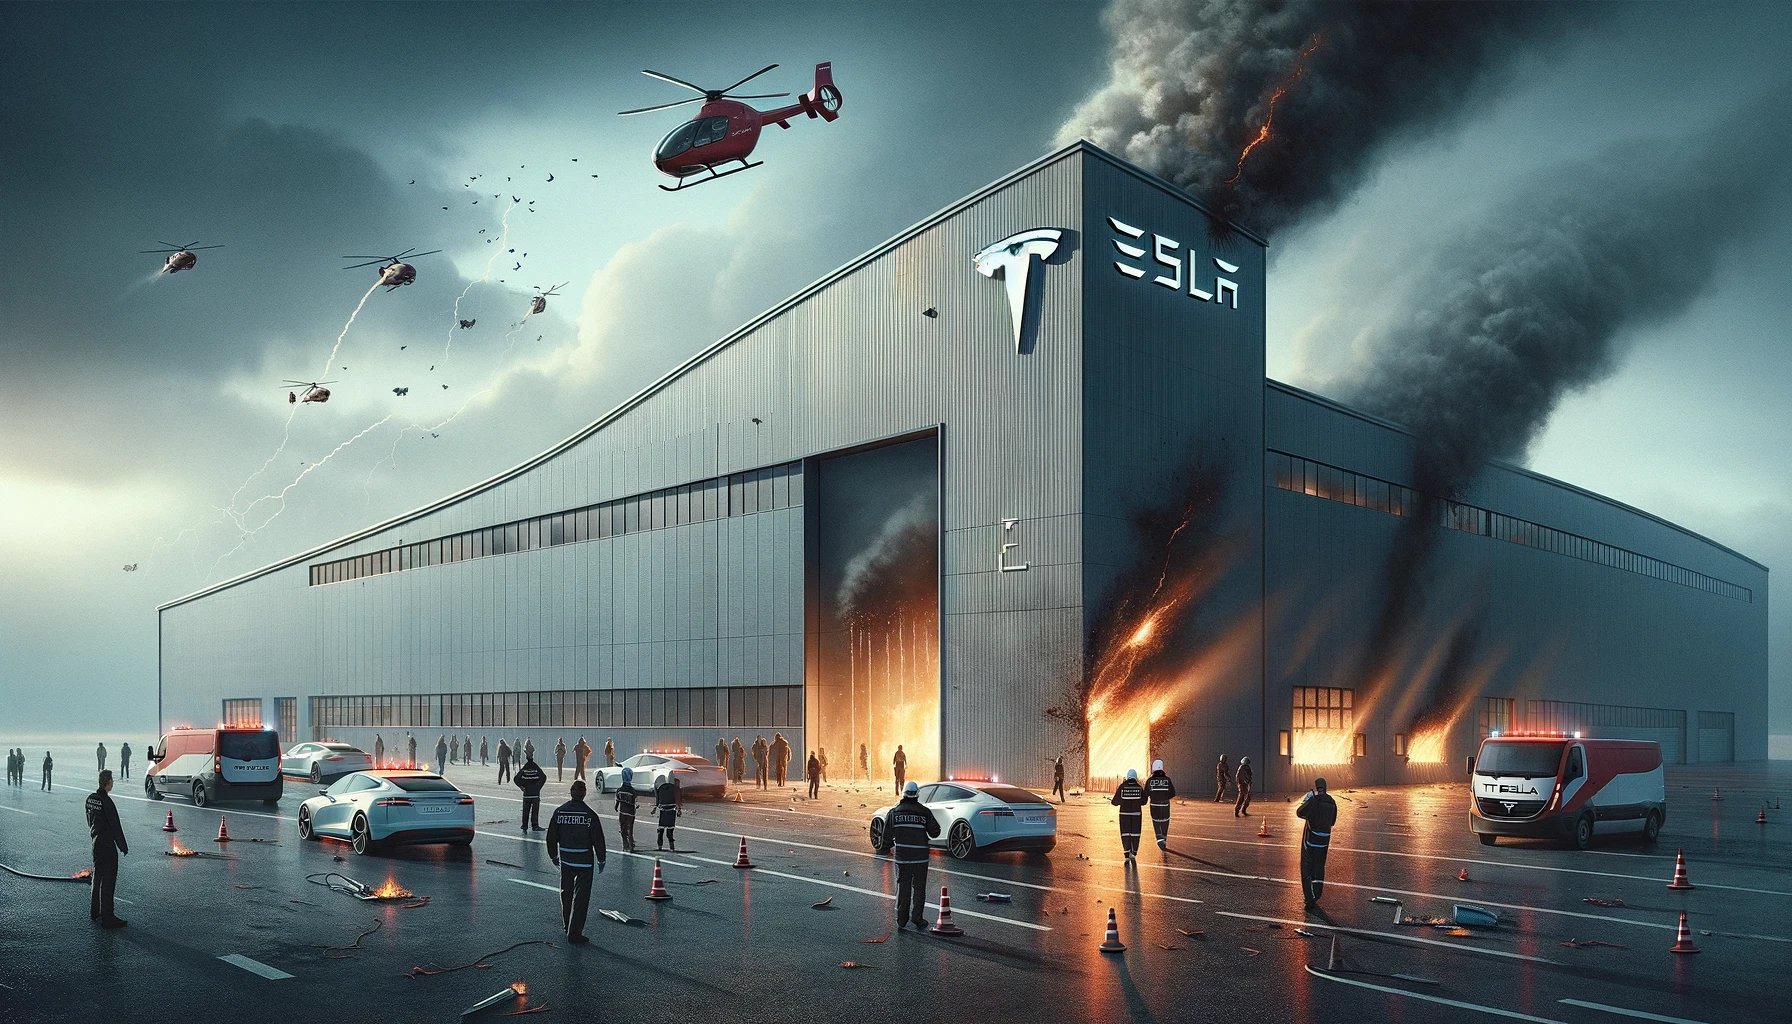 Fortsatt stopp i Teslafabrik efter brandattack